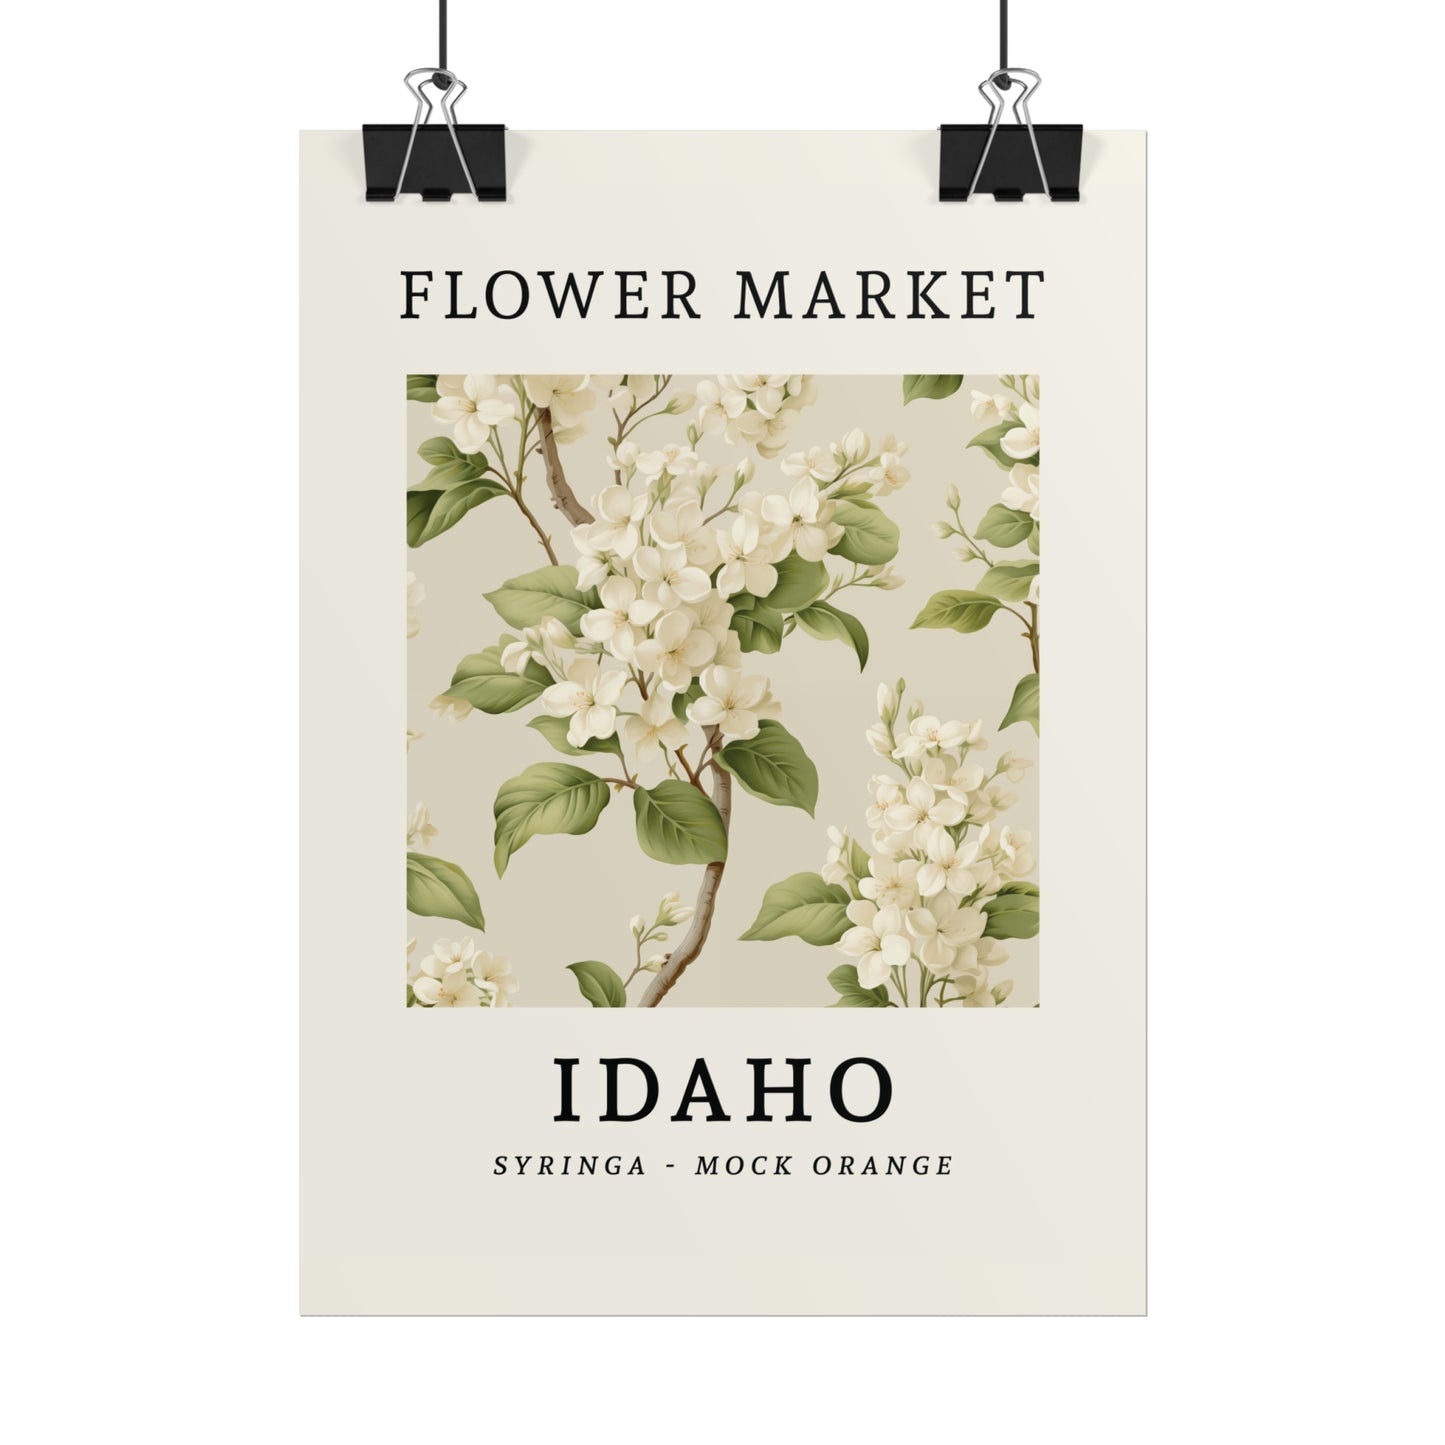 IDAHO FLOWER MARKET Poster Syringa Floral Bloom Print